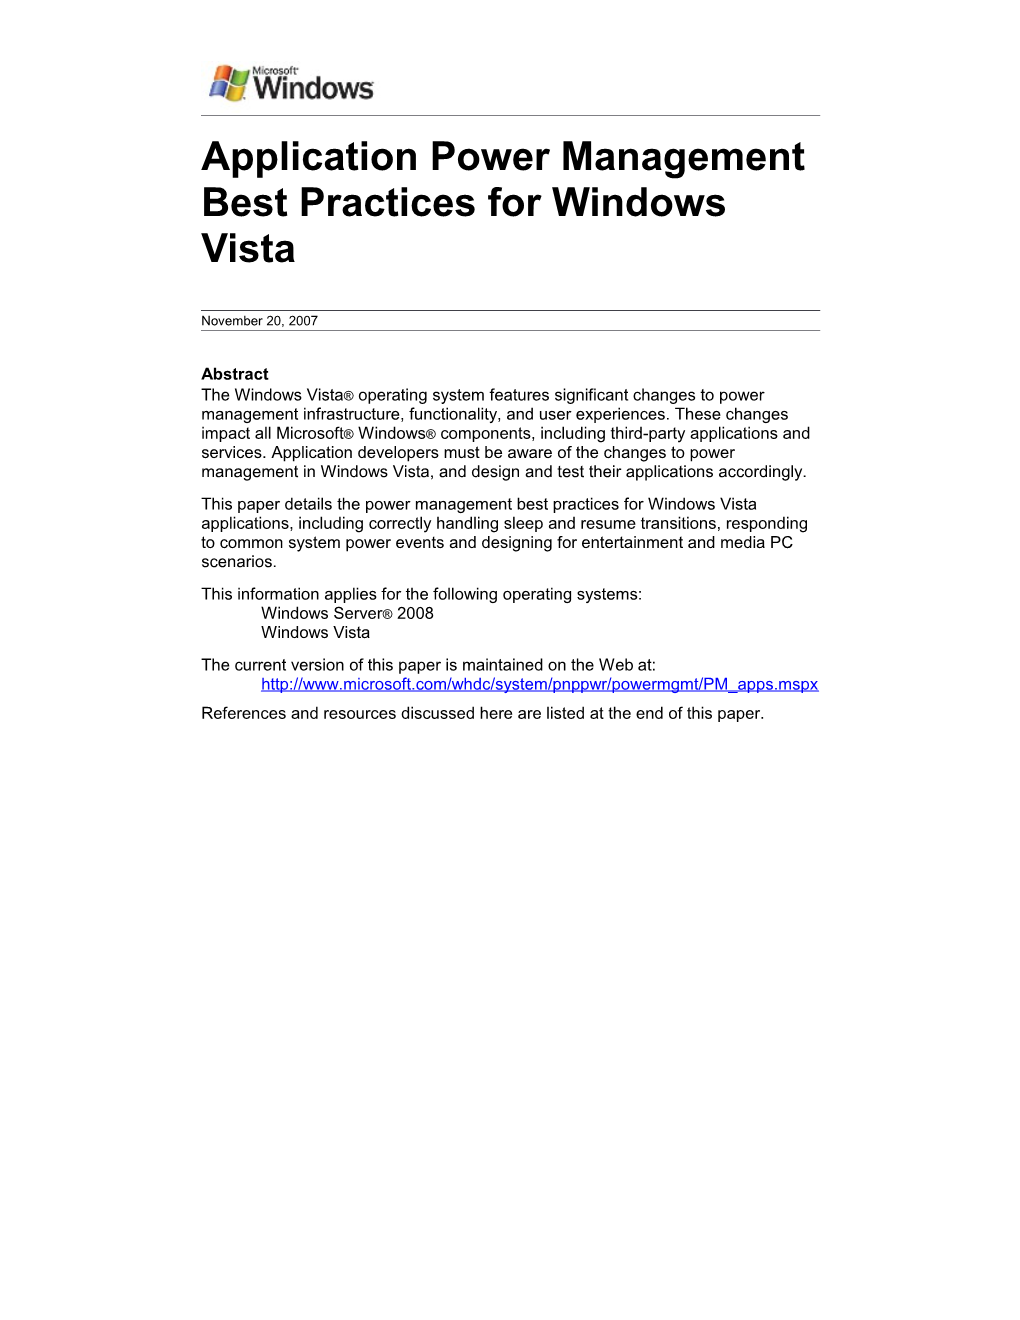 Application Power Management Best Practices For Windows Vista